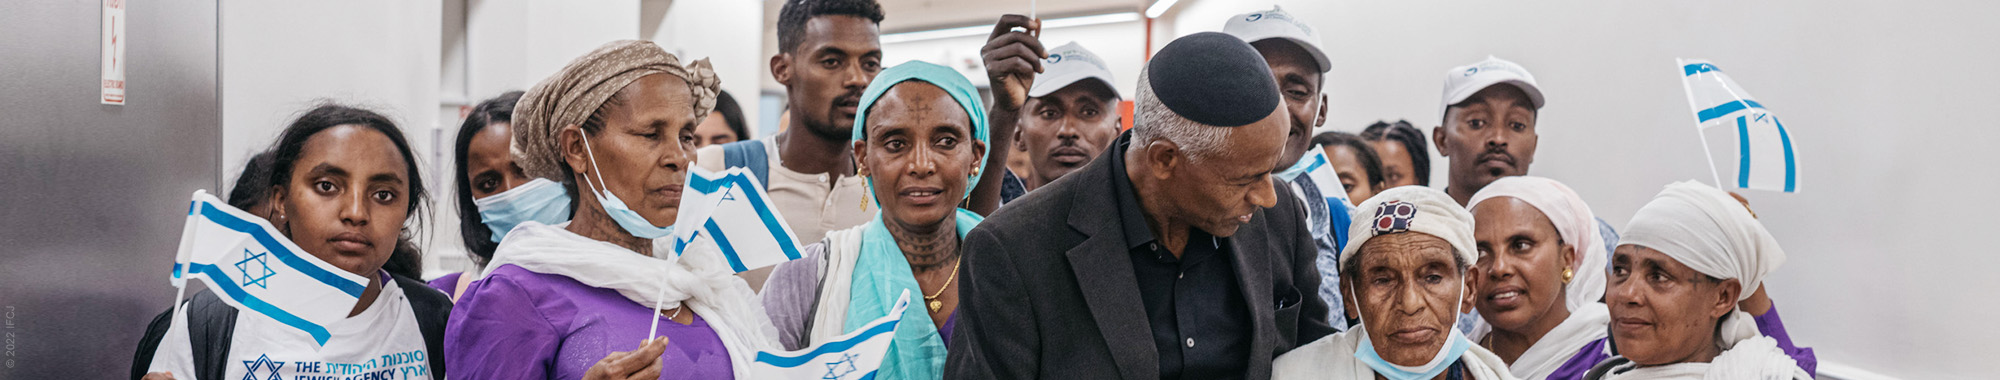 Ethiopian Jews arrive in Israel holding Israeli flags